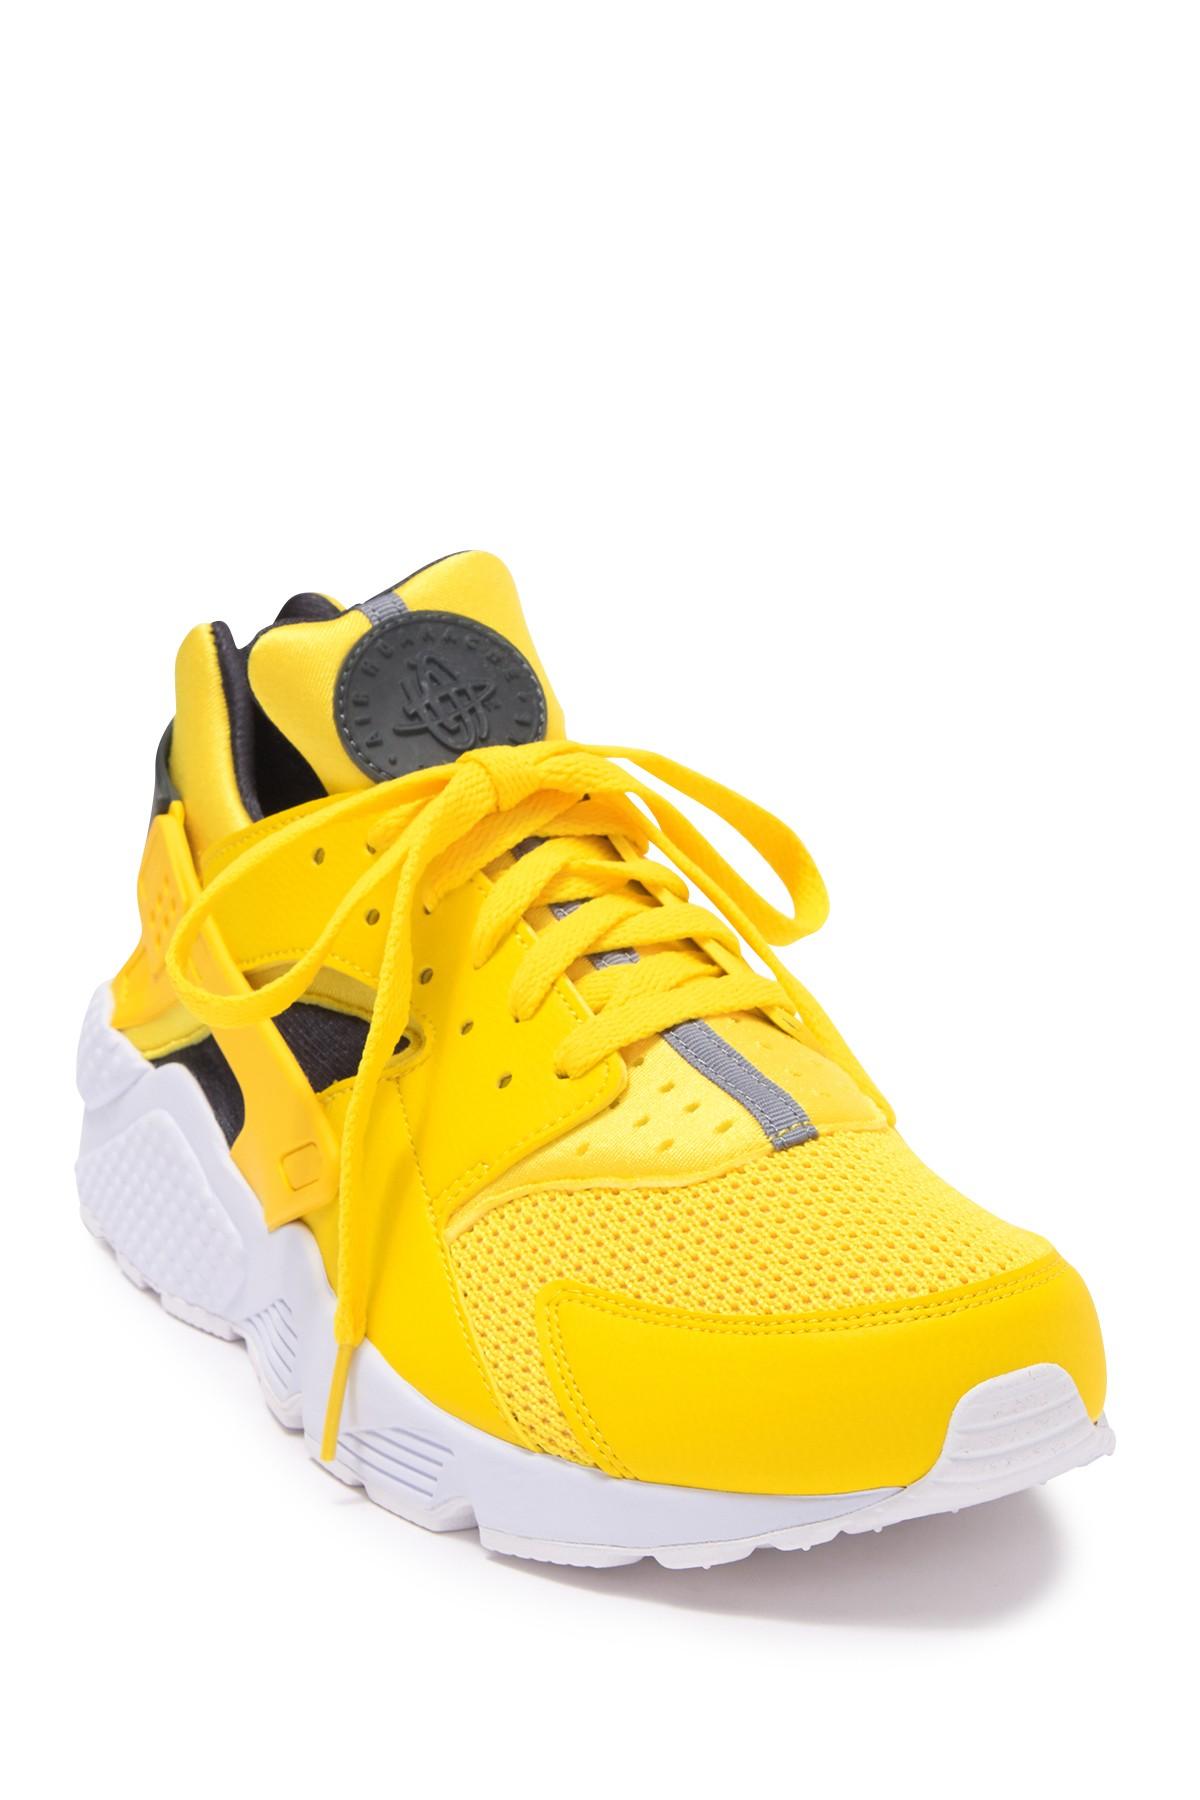 Nike Neoprene Air Huarache Run in Yellow for Men - Lyst